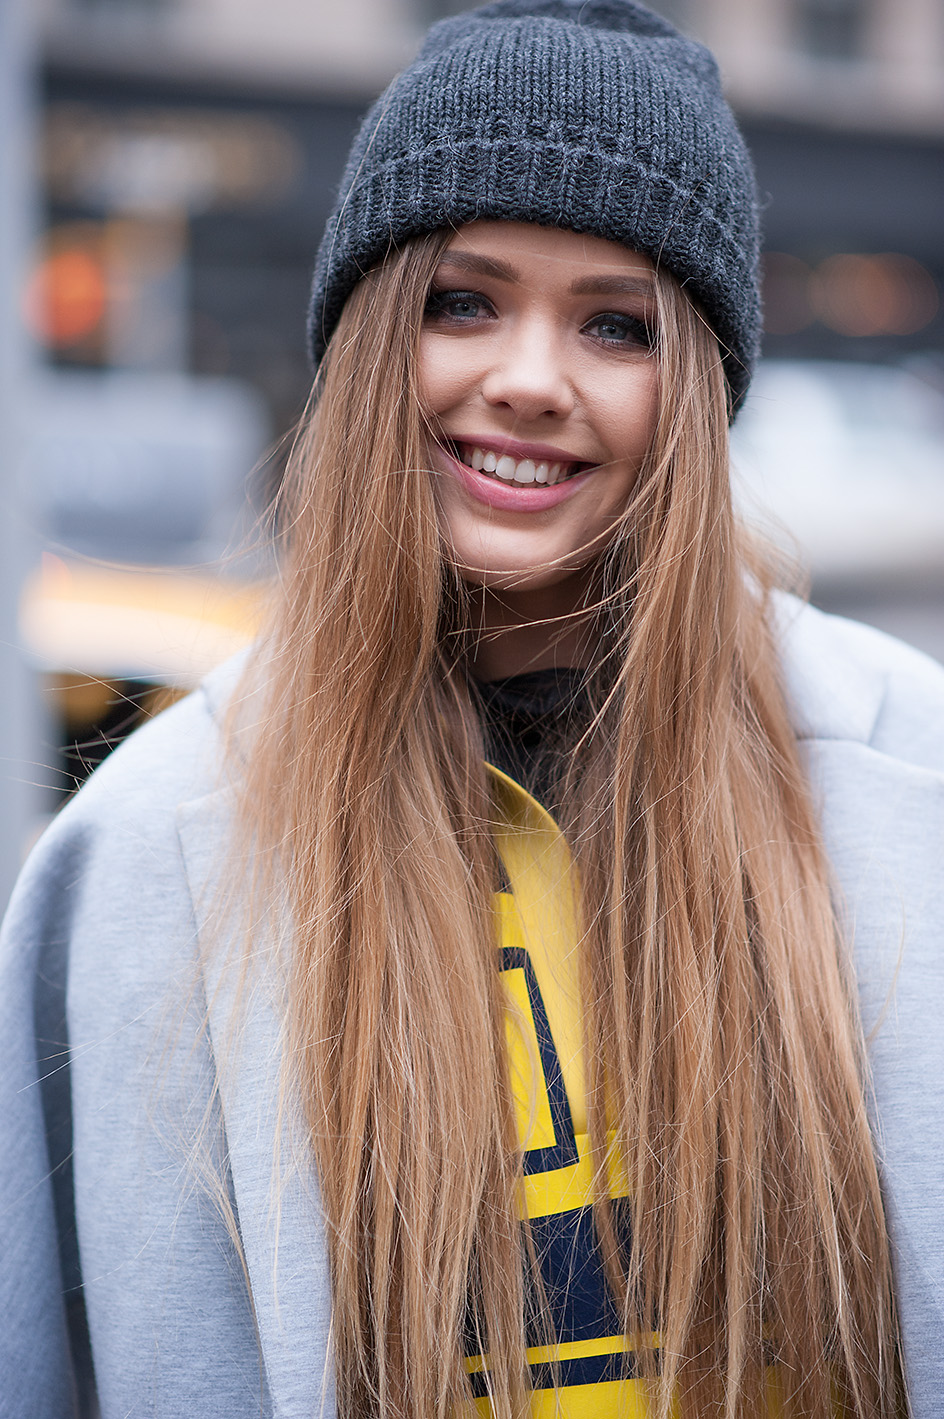 New York woman fashion Week Fall Winter 2015-16
In the picture: Kristina Bazan